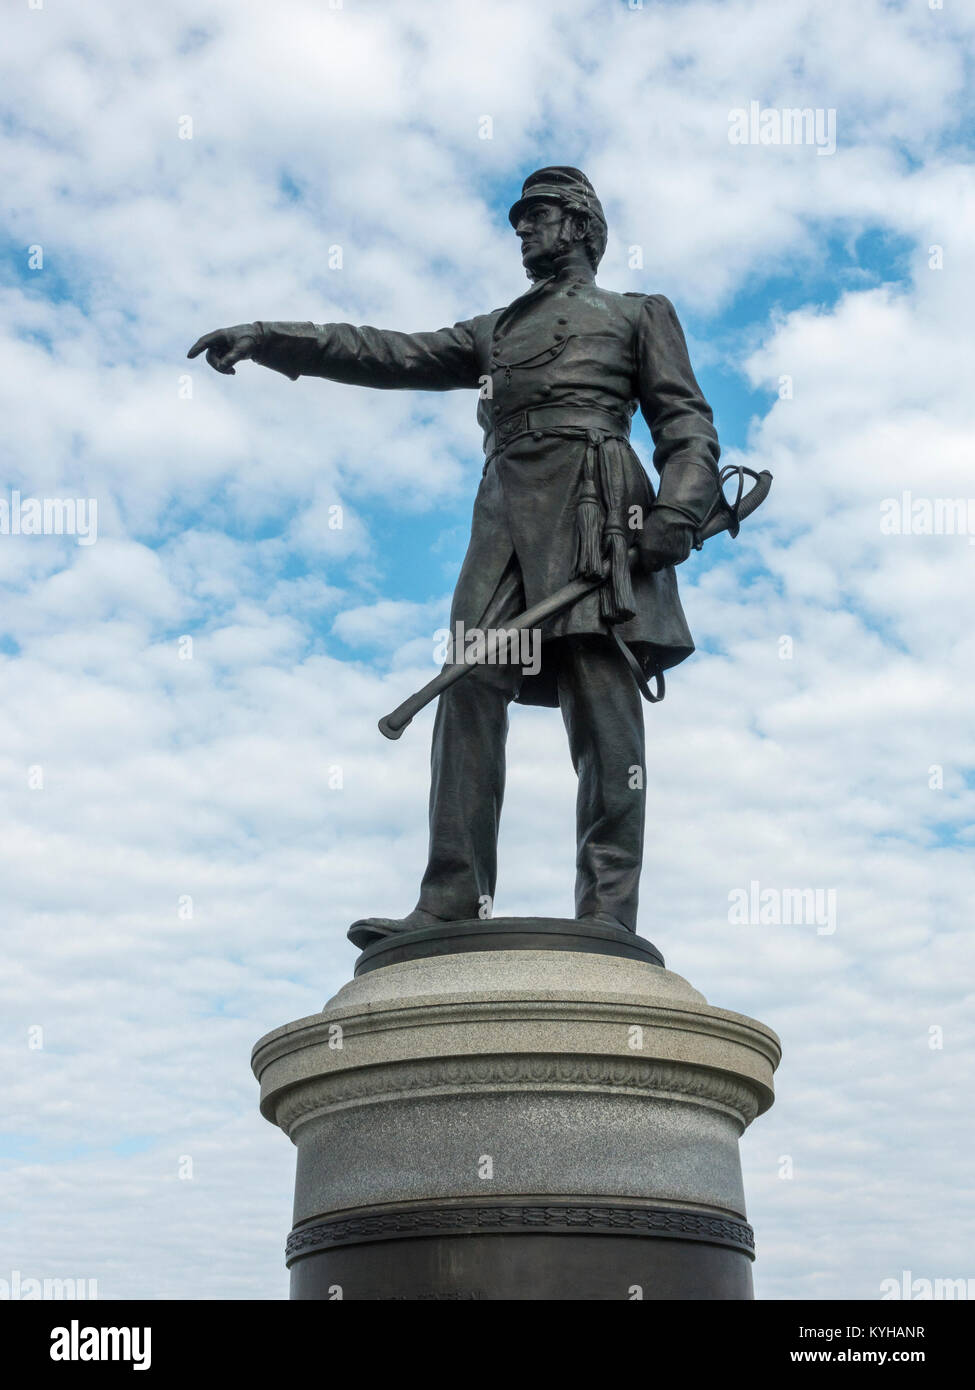 Le brigadier général James Wadsworth Statue, Gettysburg National Military Park, Virginia, United States. Banque D'Images